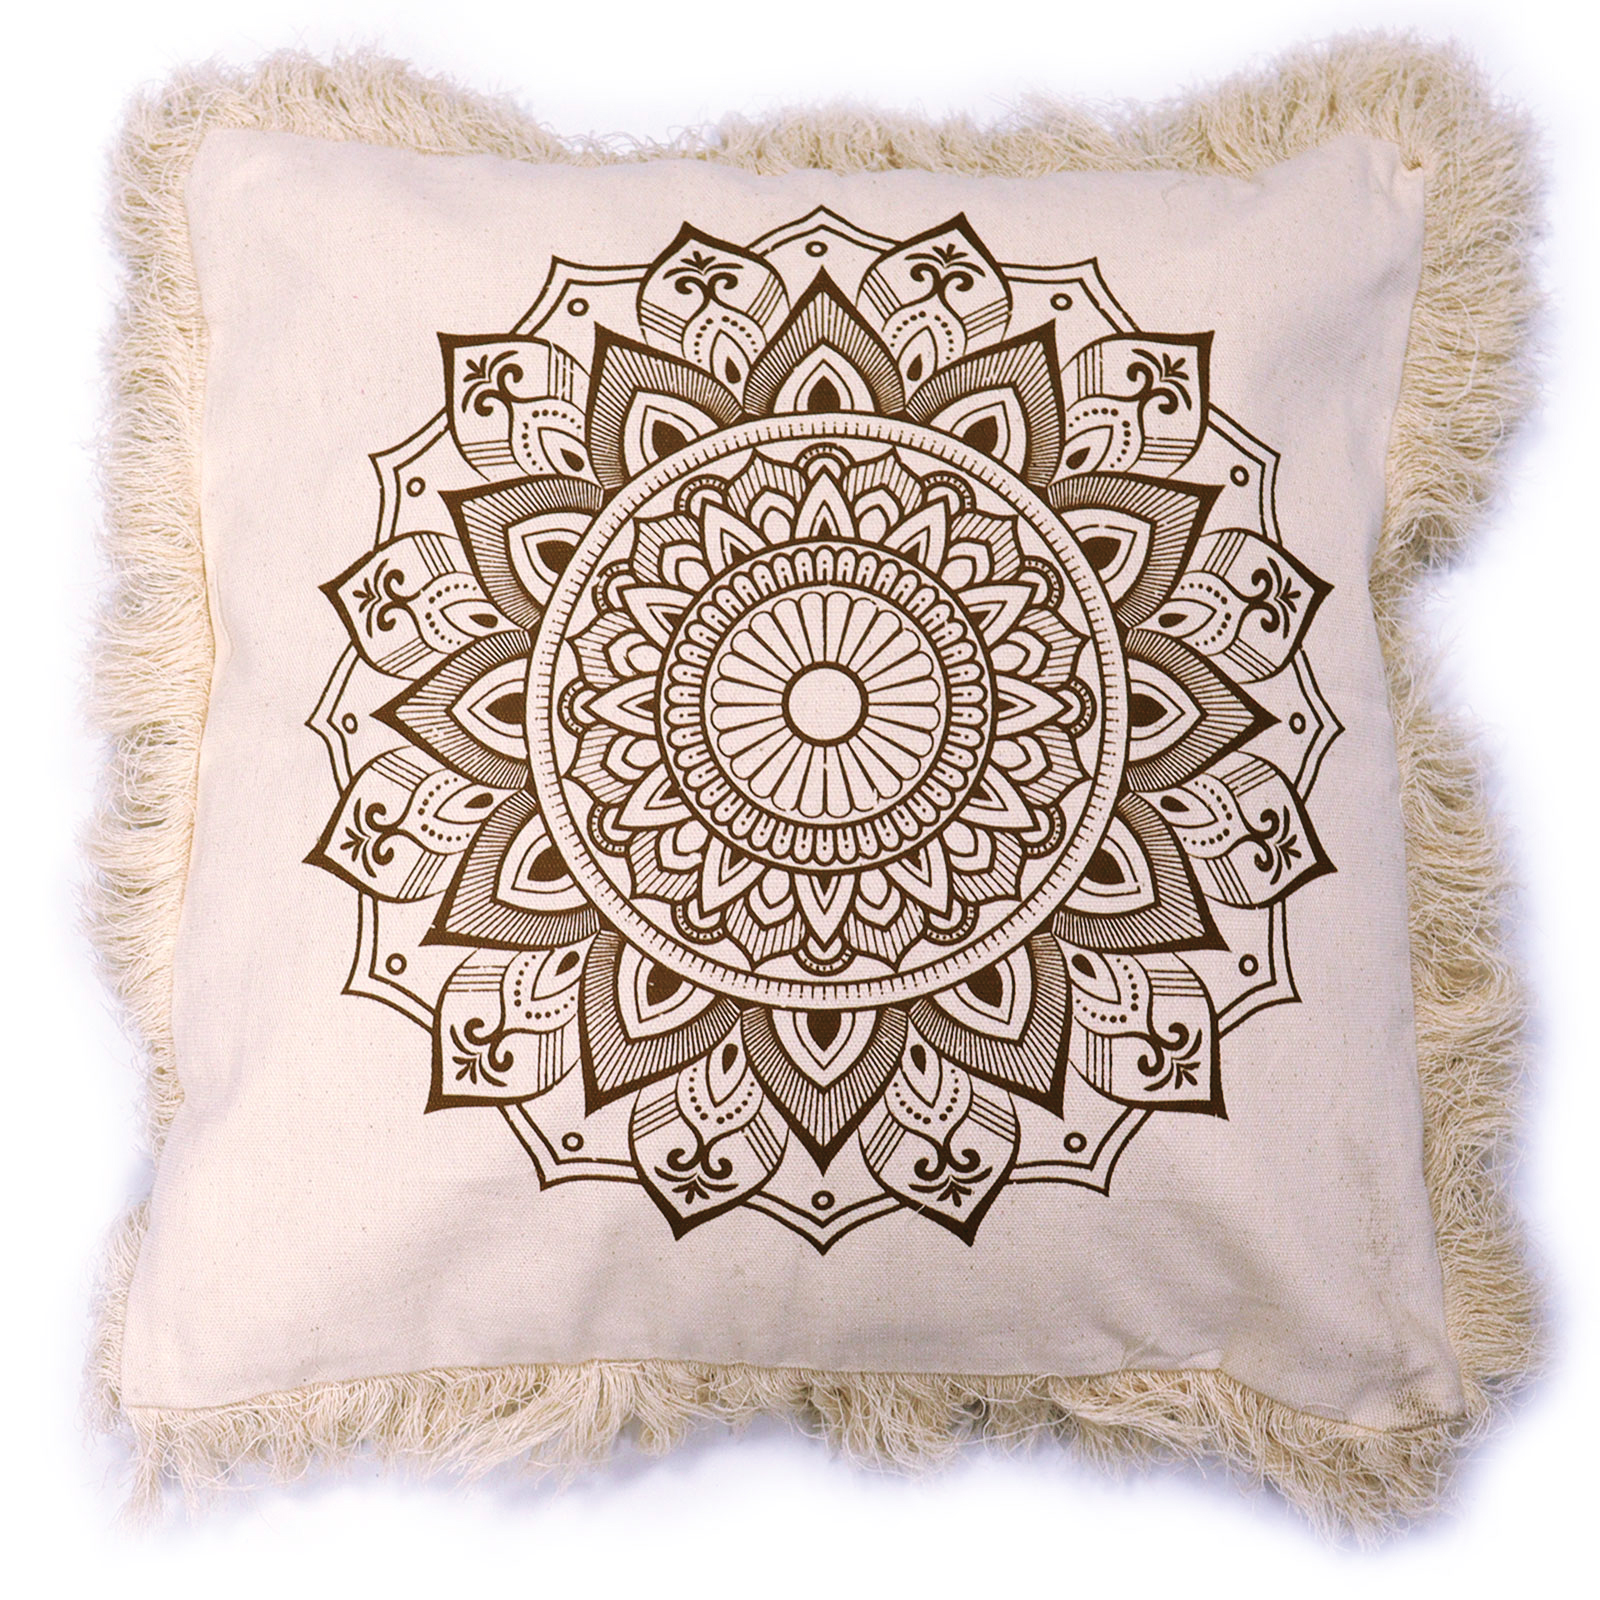 Lotus Mandala Cushion Cover - 45x45cm - bronze